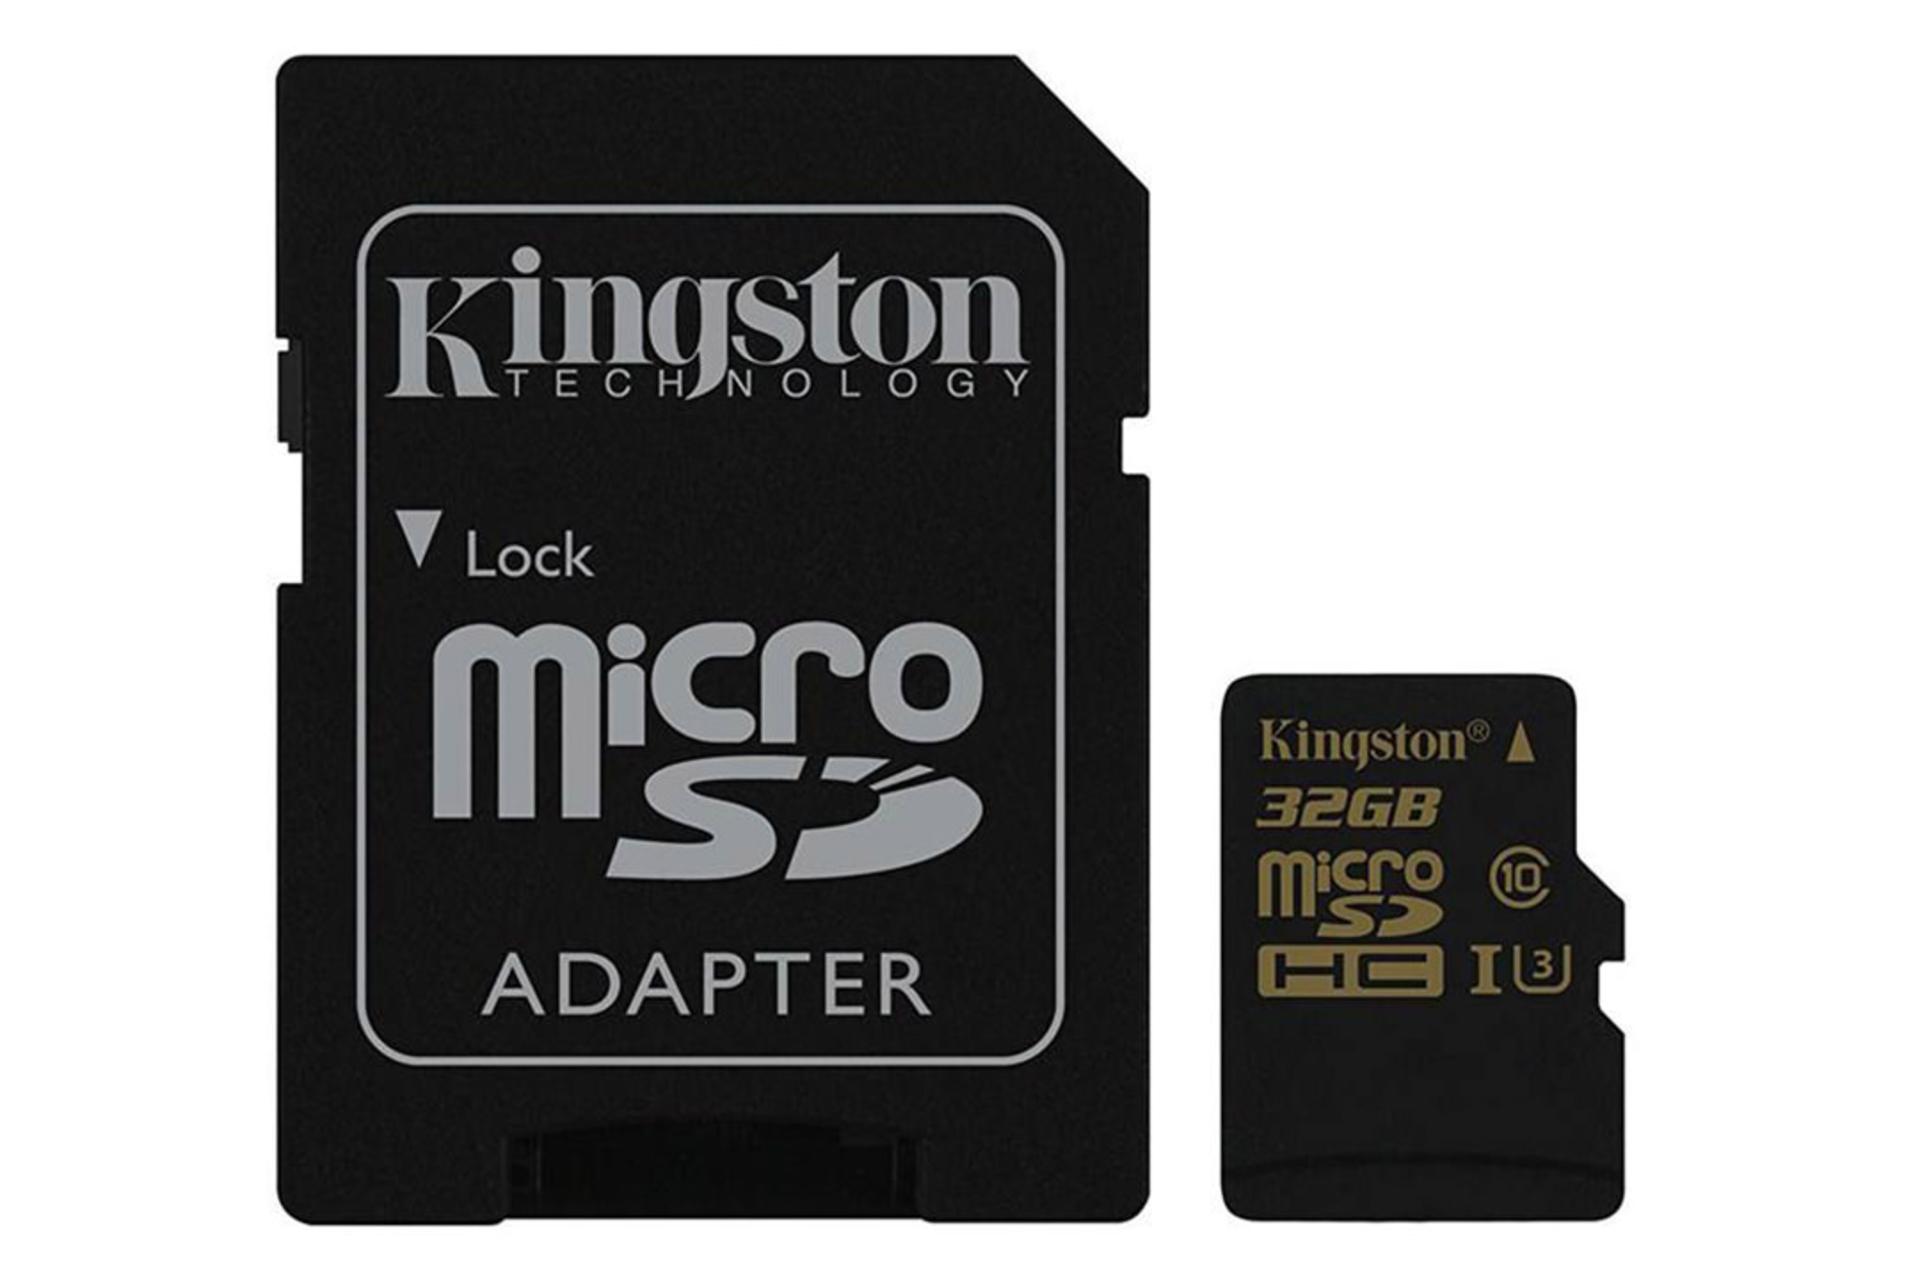 Kingston Gold microSDHC Class 10 UHS-I U3 32GB